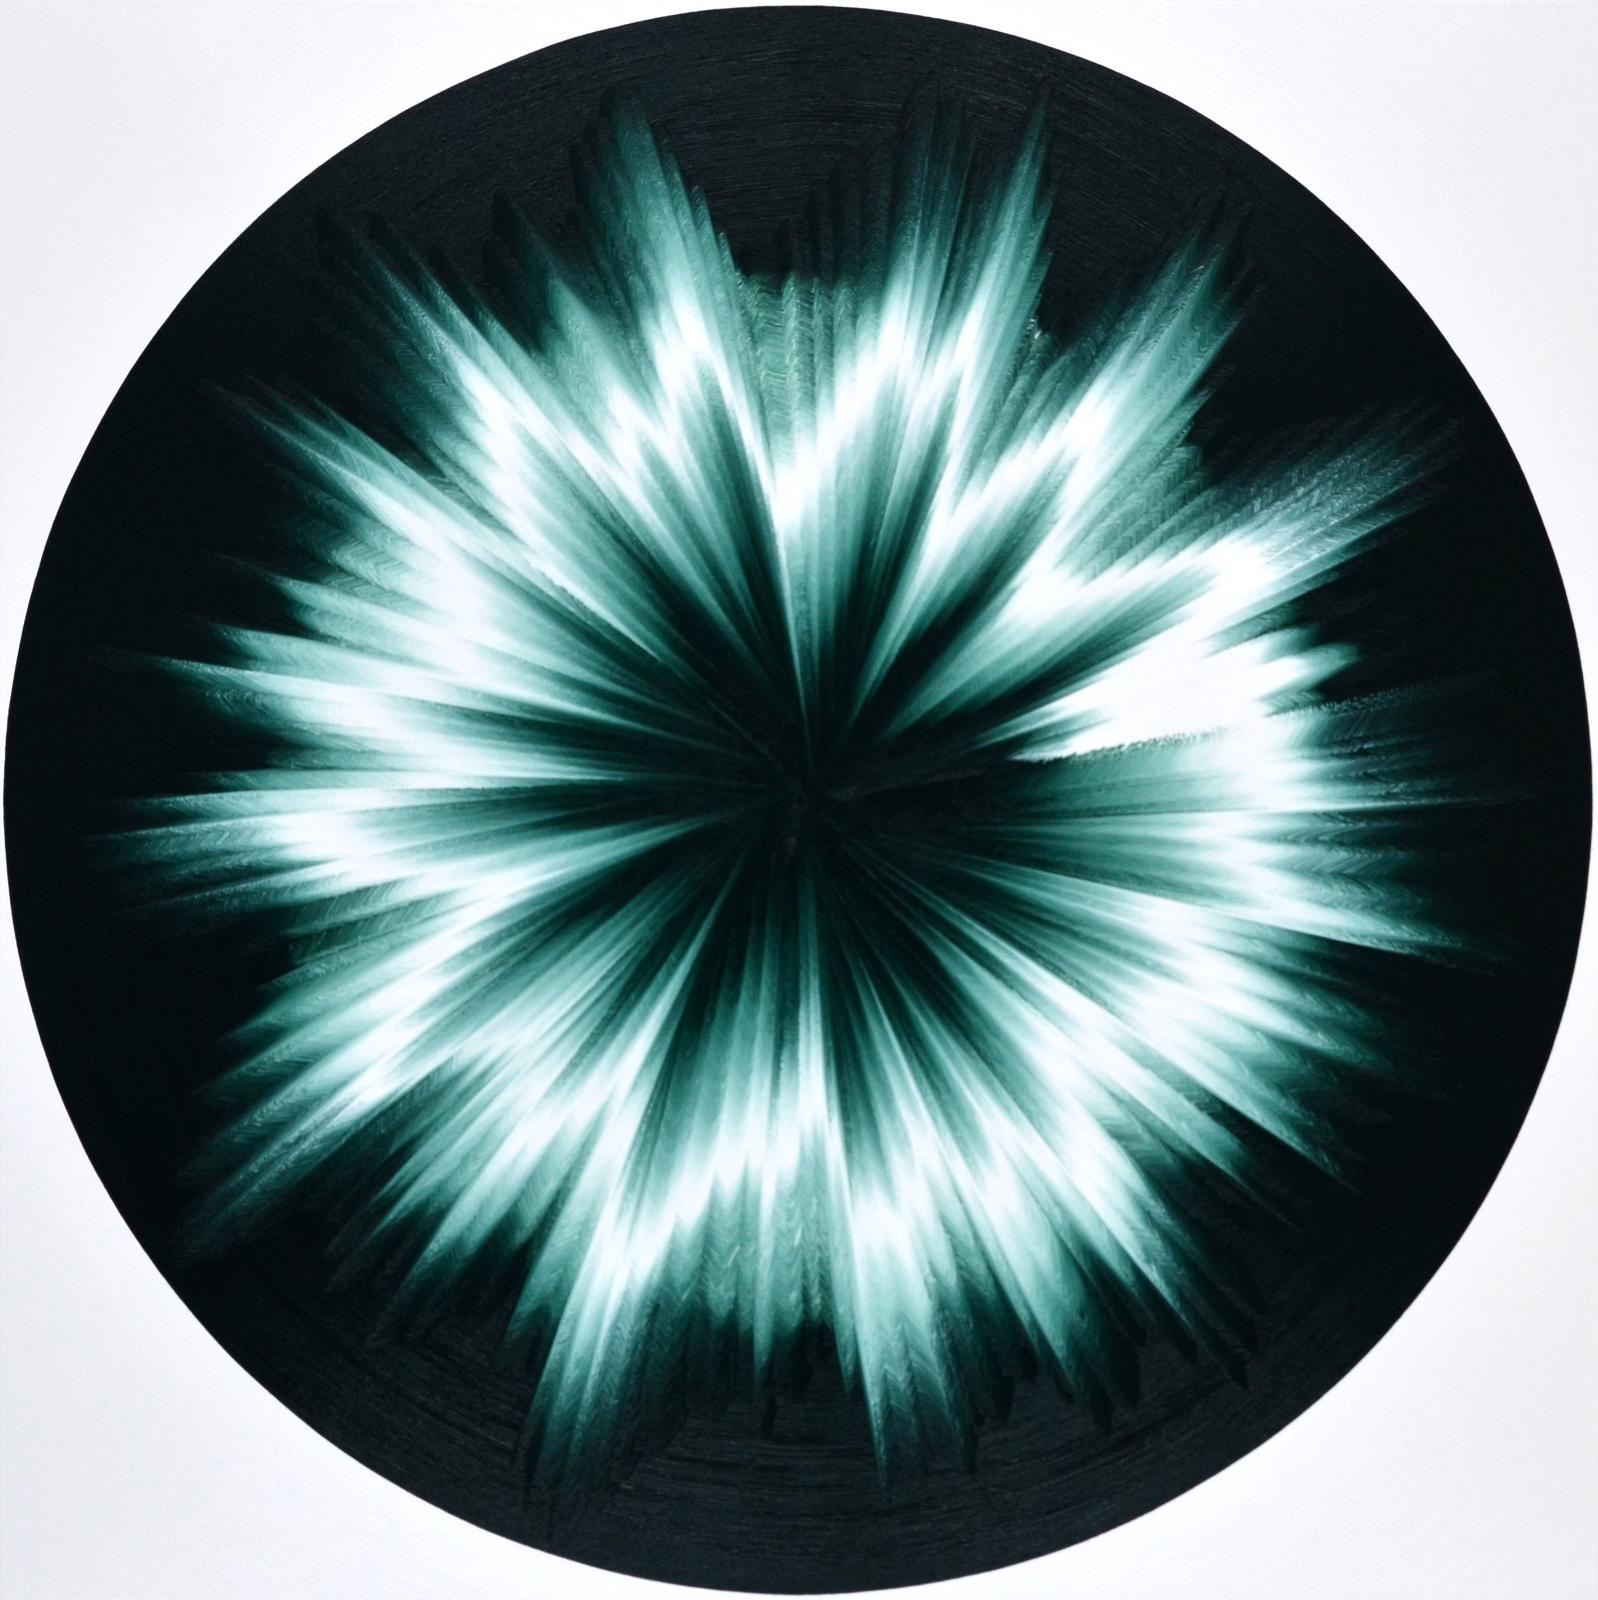 Vera Leutloff
Circular Oszillation: Grünlack dunkel
2020
Öl auf Leinwand
120 cm x 120 cm
Preis auf Anfrage, lev003de